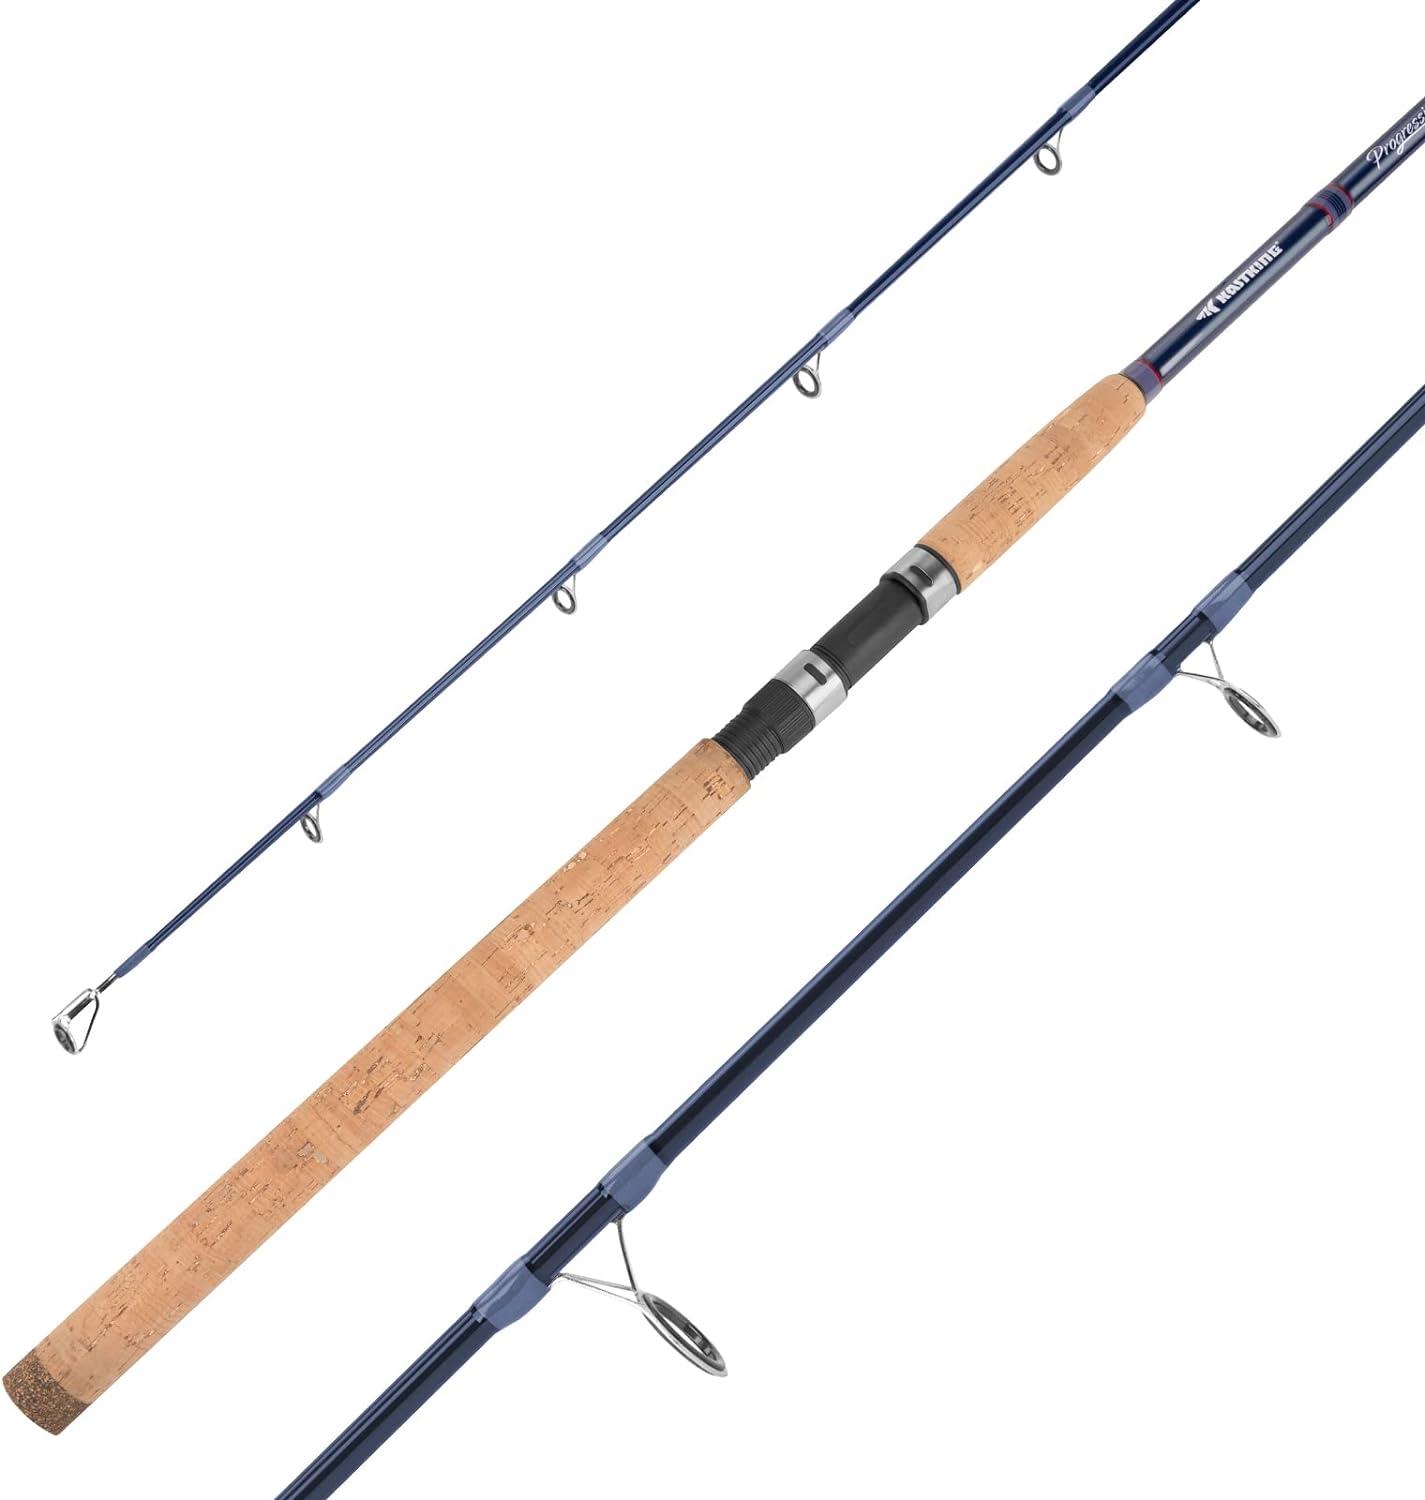 KastKing Progressive Glass Fishing Rods Spinning & Casting Rods